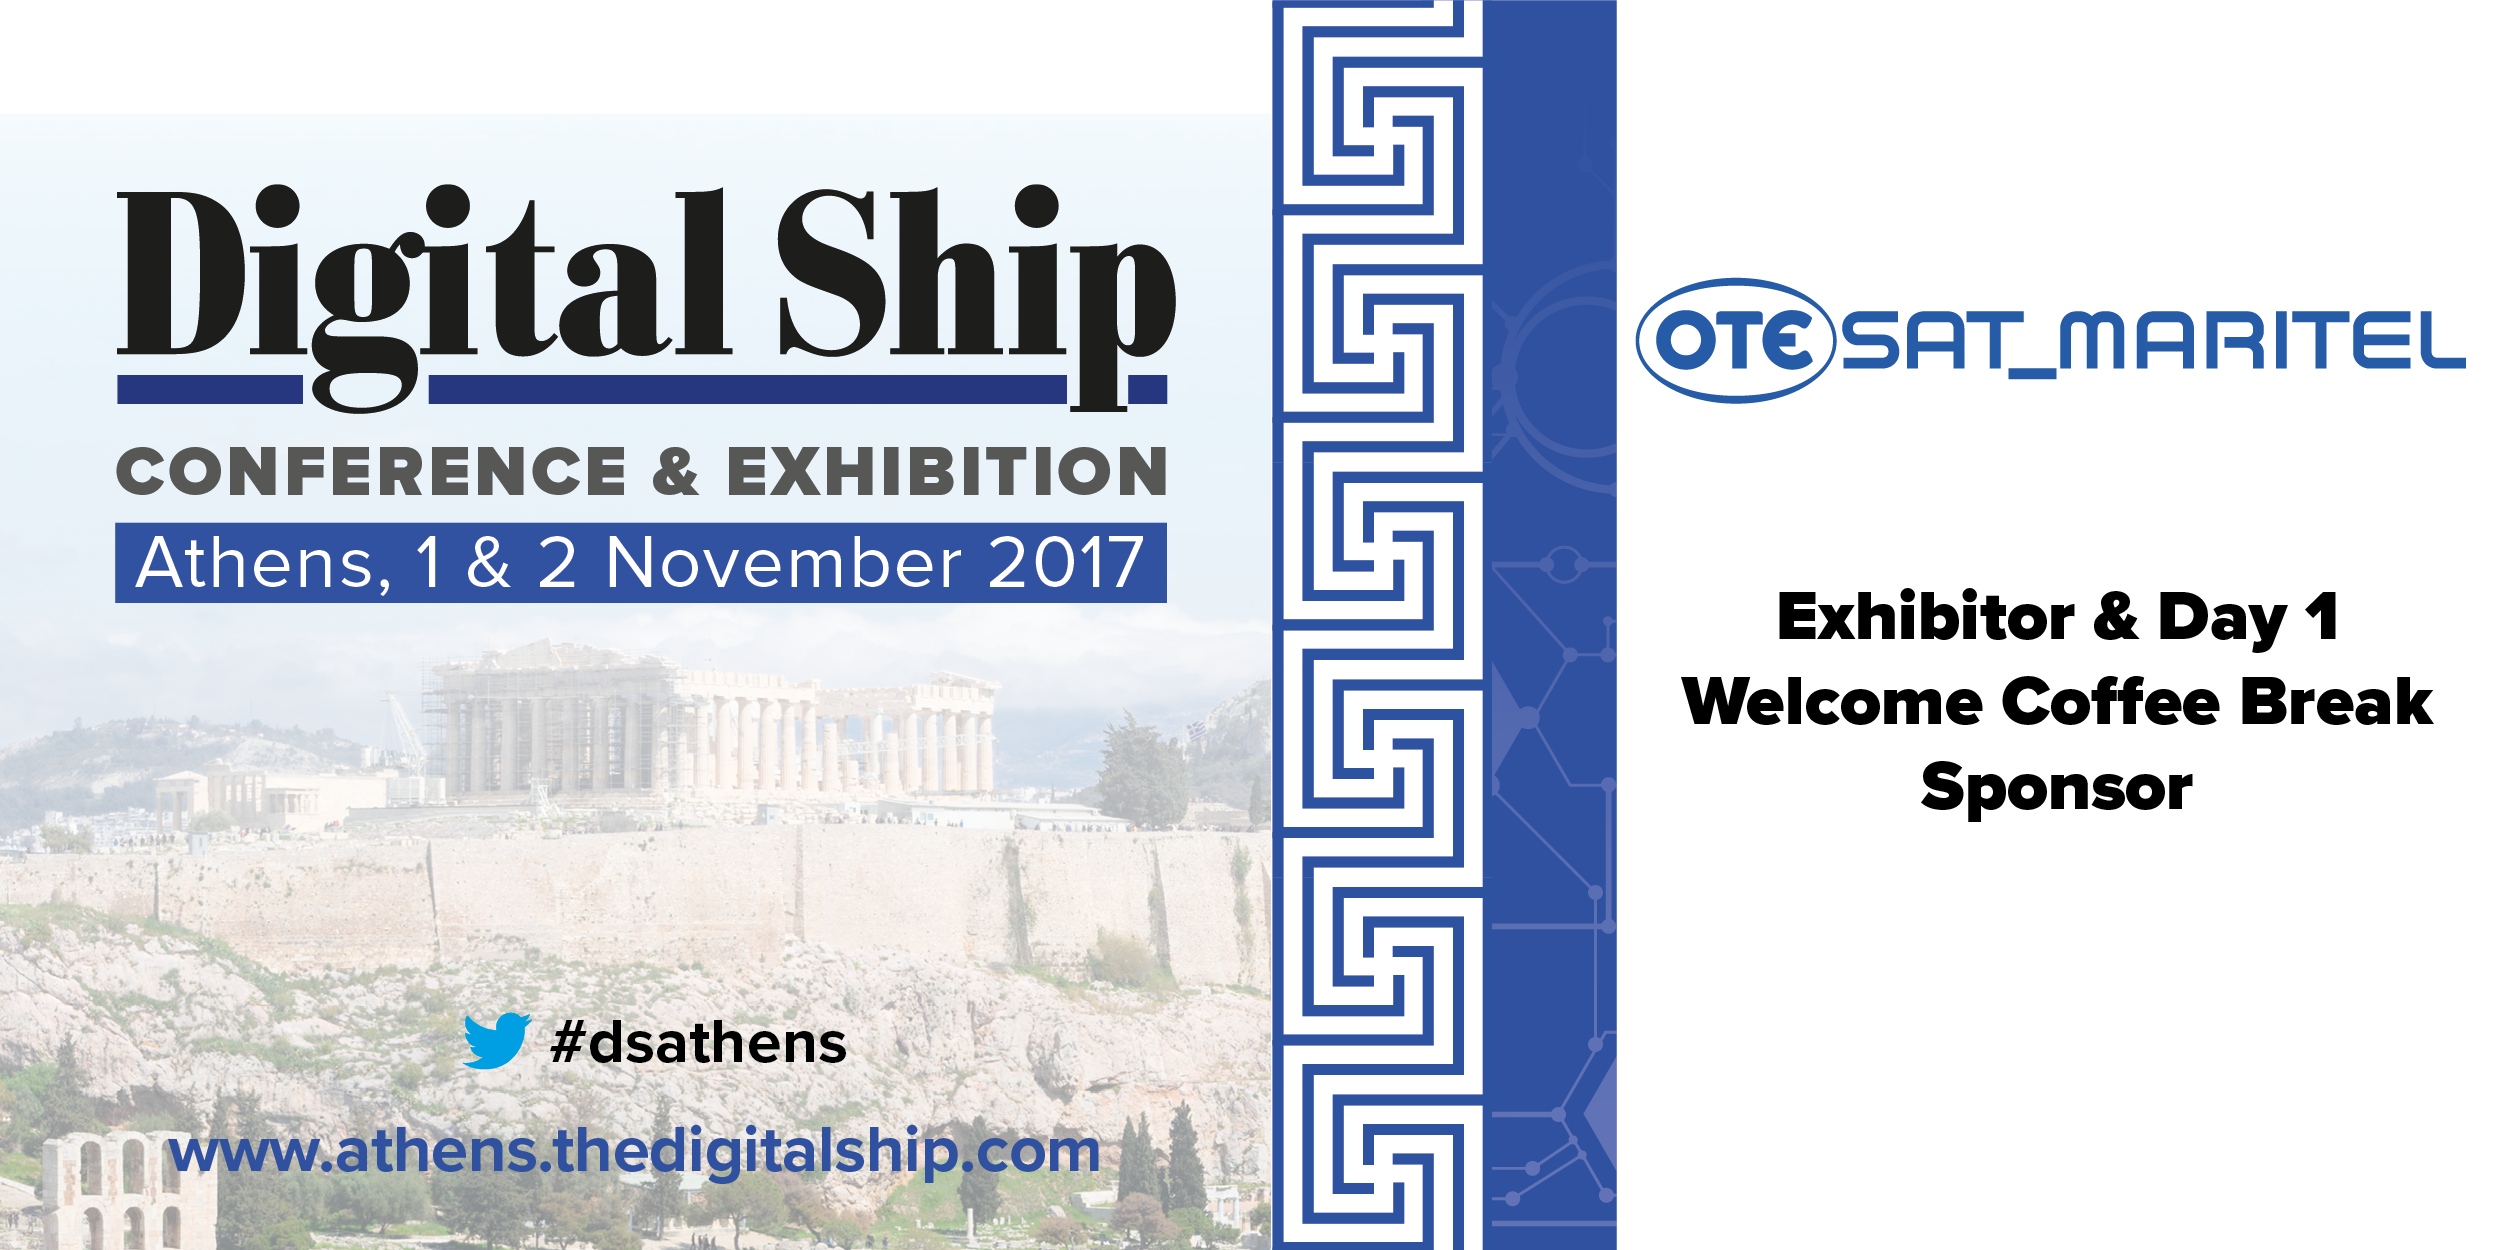 OTESAT_MARITEL at Athens “Digital Ship 2017”